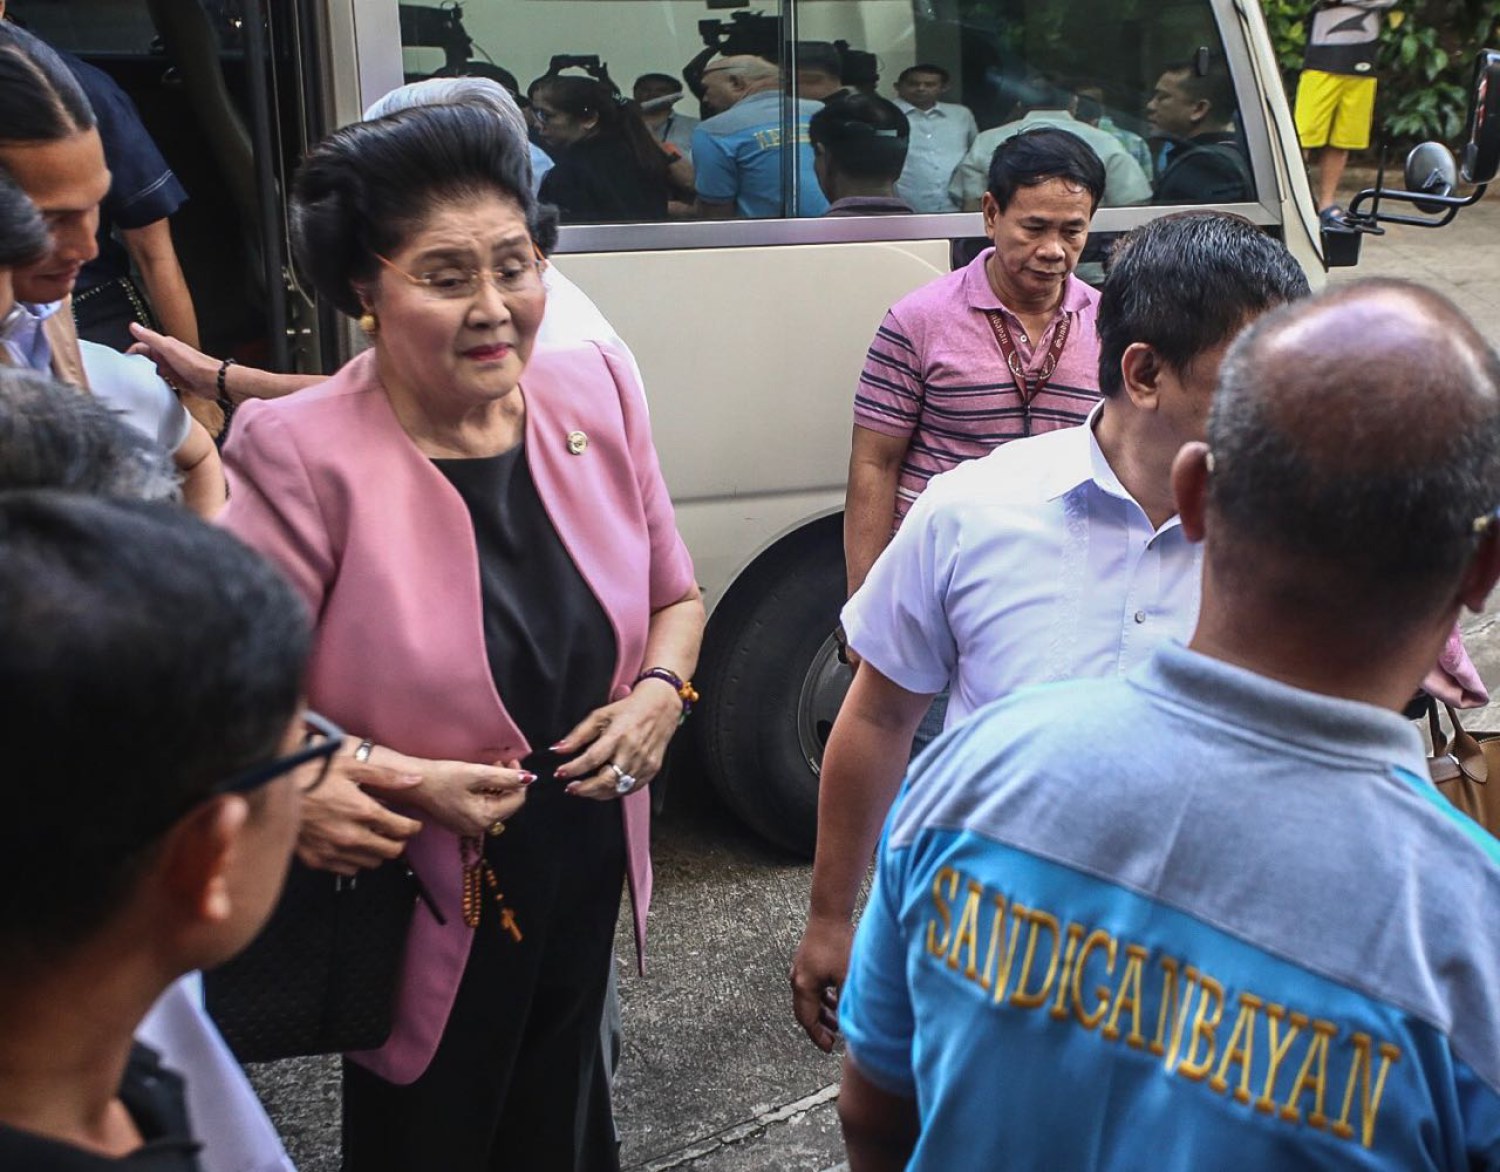 LOOK: Imelda Marcos arrives at Sandiganbayan for graft hearing